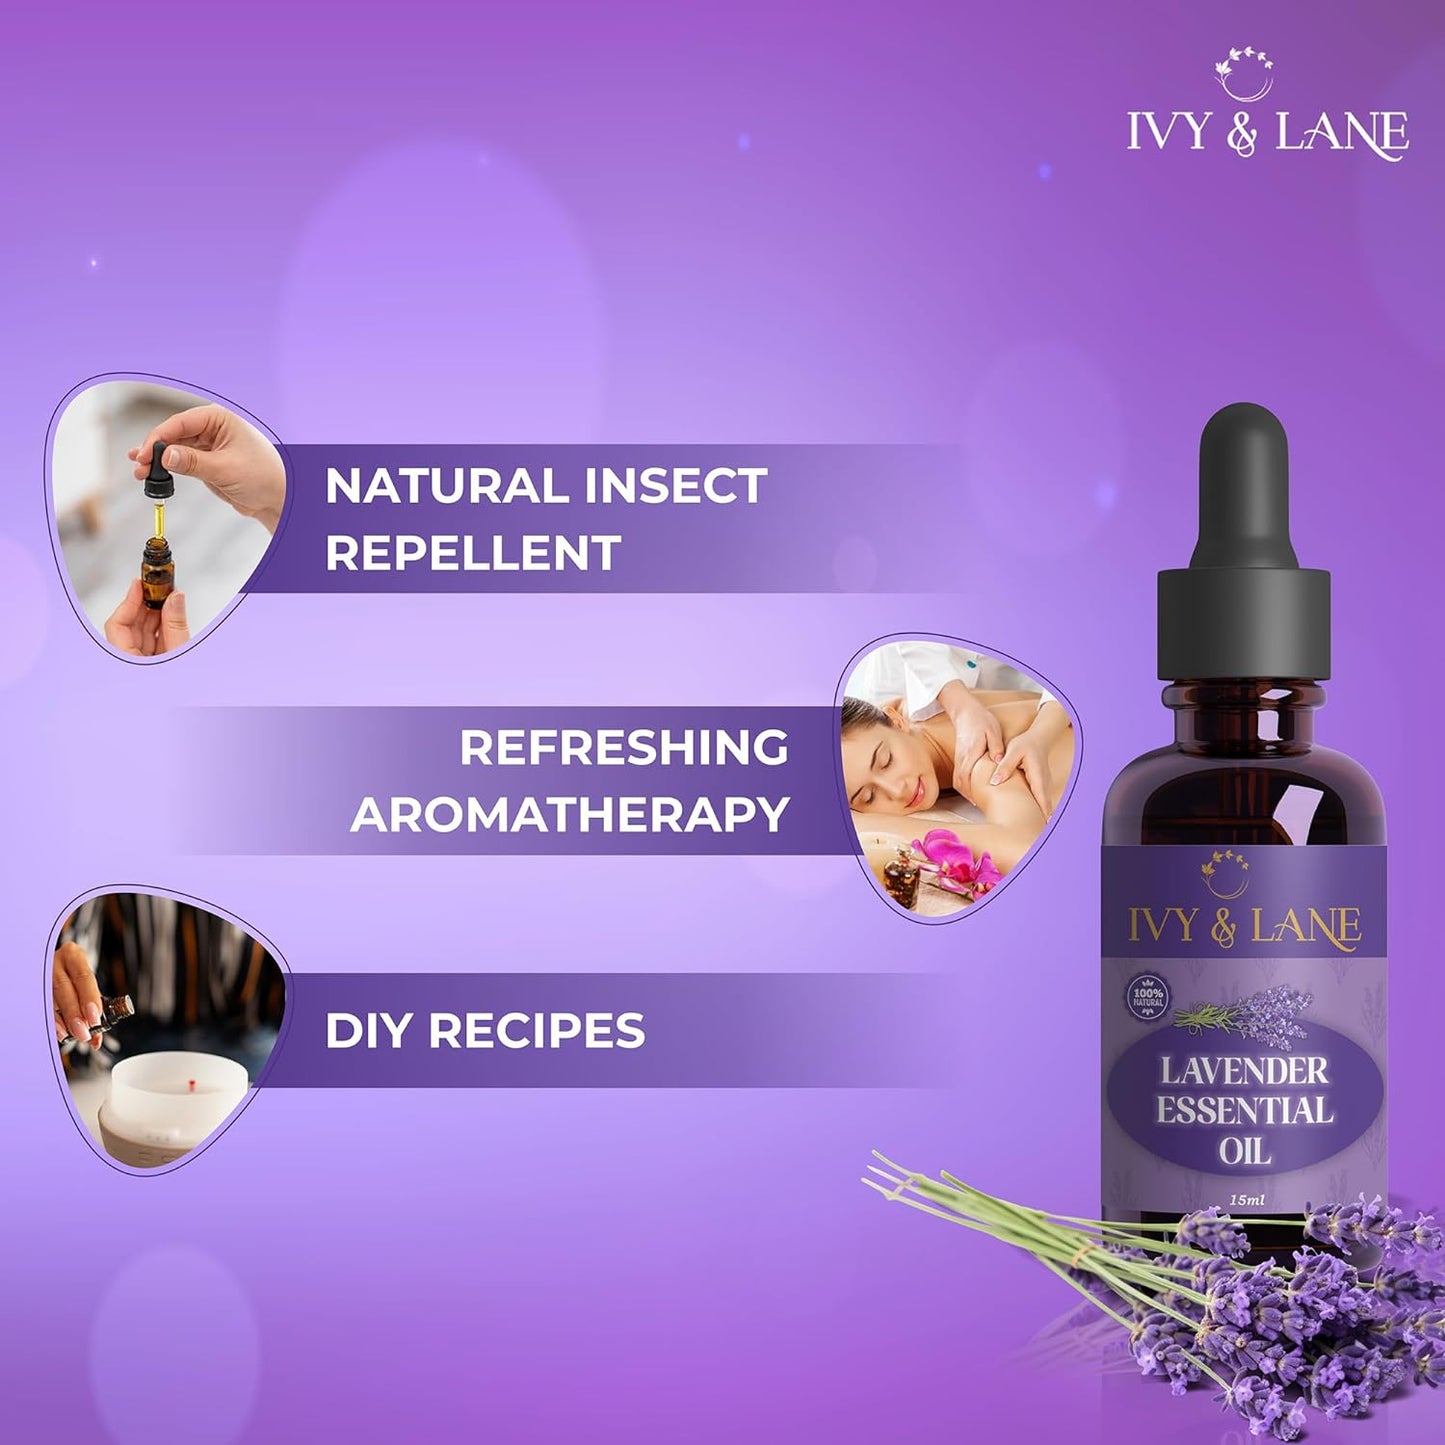 Ivy & Lane Lavender Essential Oil